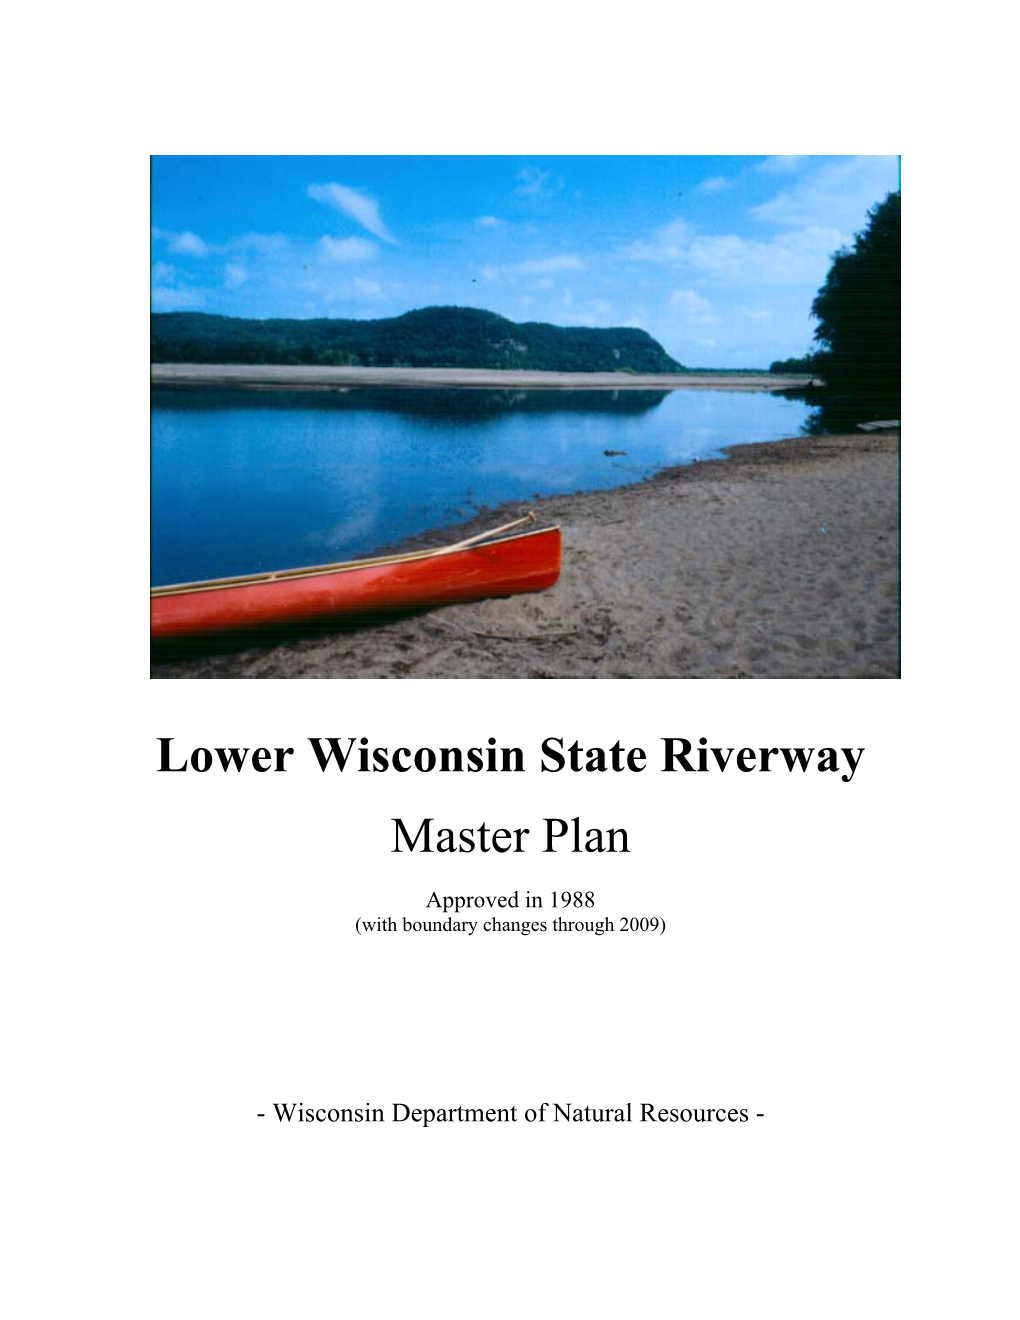 Lower Wisconsin State Riverway Master Plan (2010)